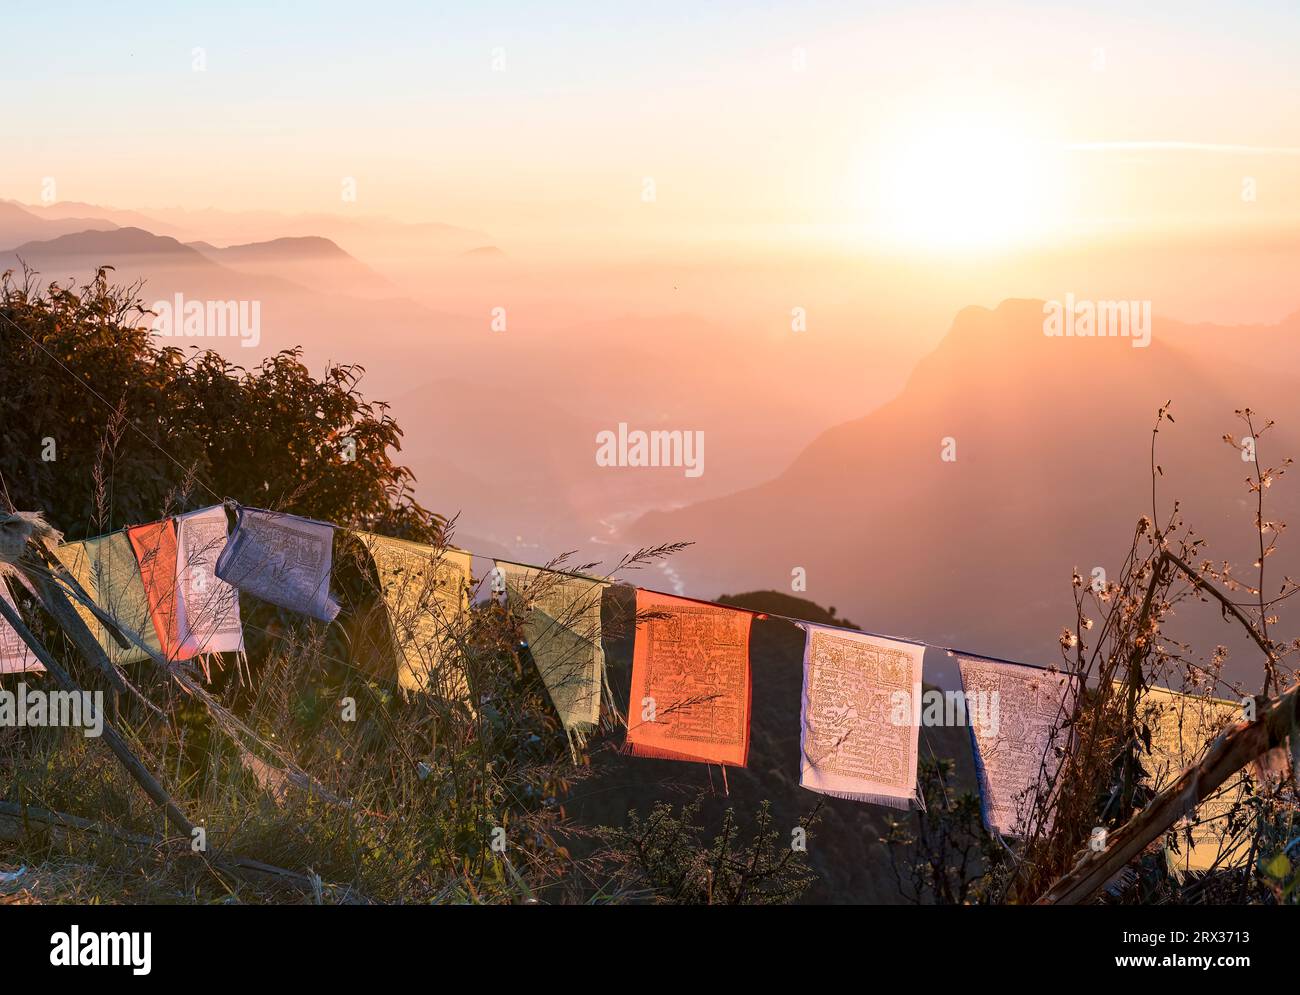 A colourful sunrise over the mountains of the Anapurna range, Australian Camp, Himalayas, Nepal, Asia Stock Photo